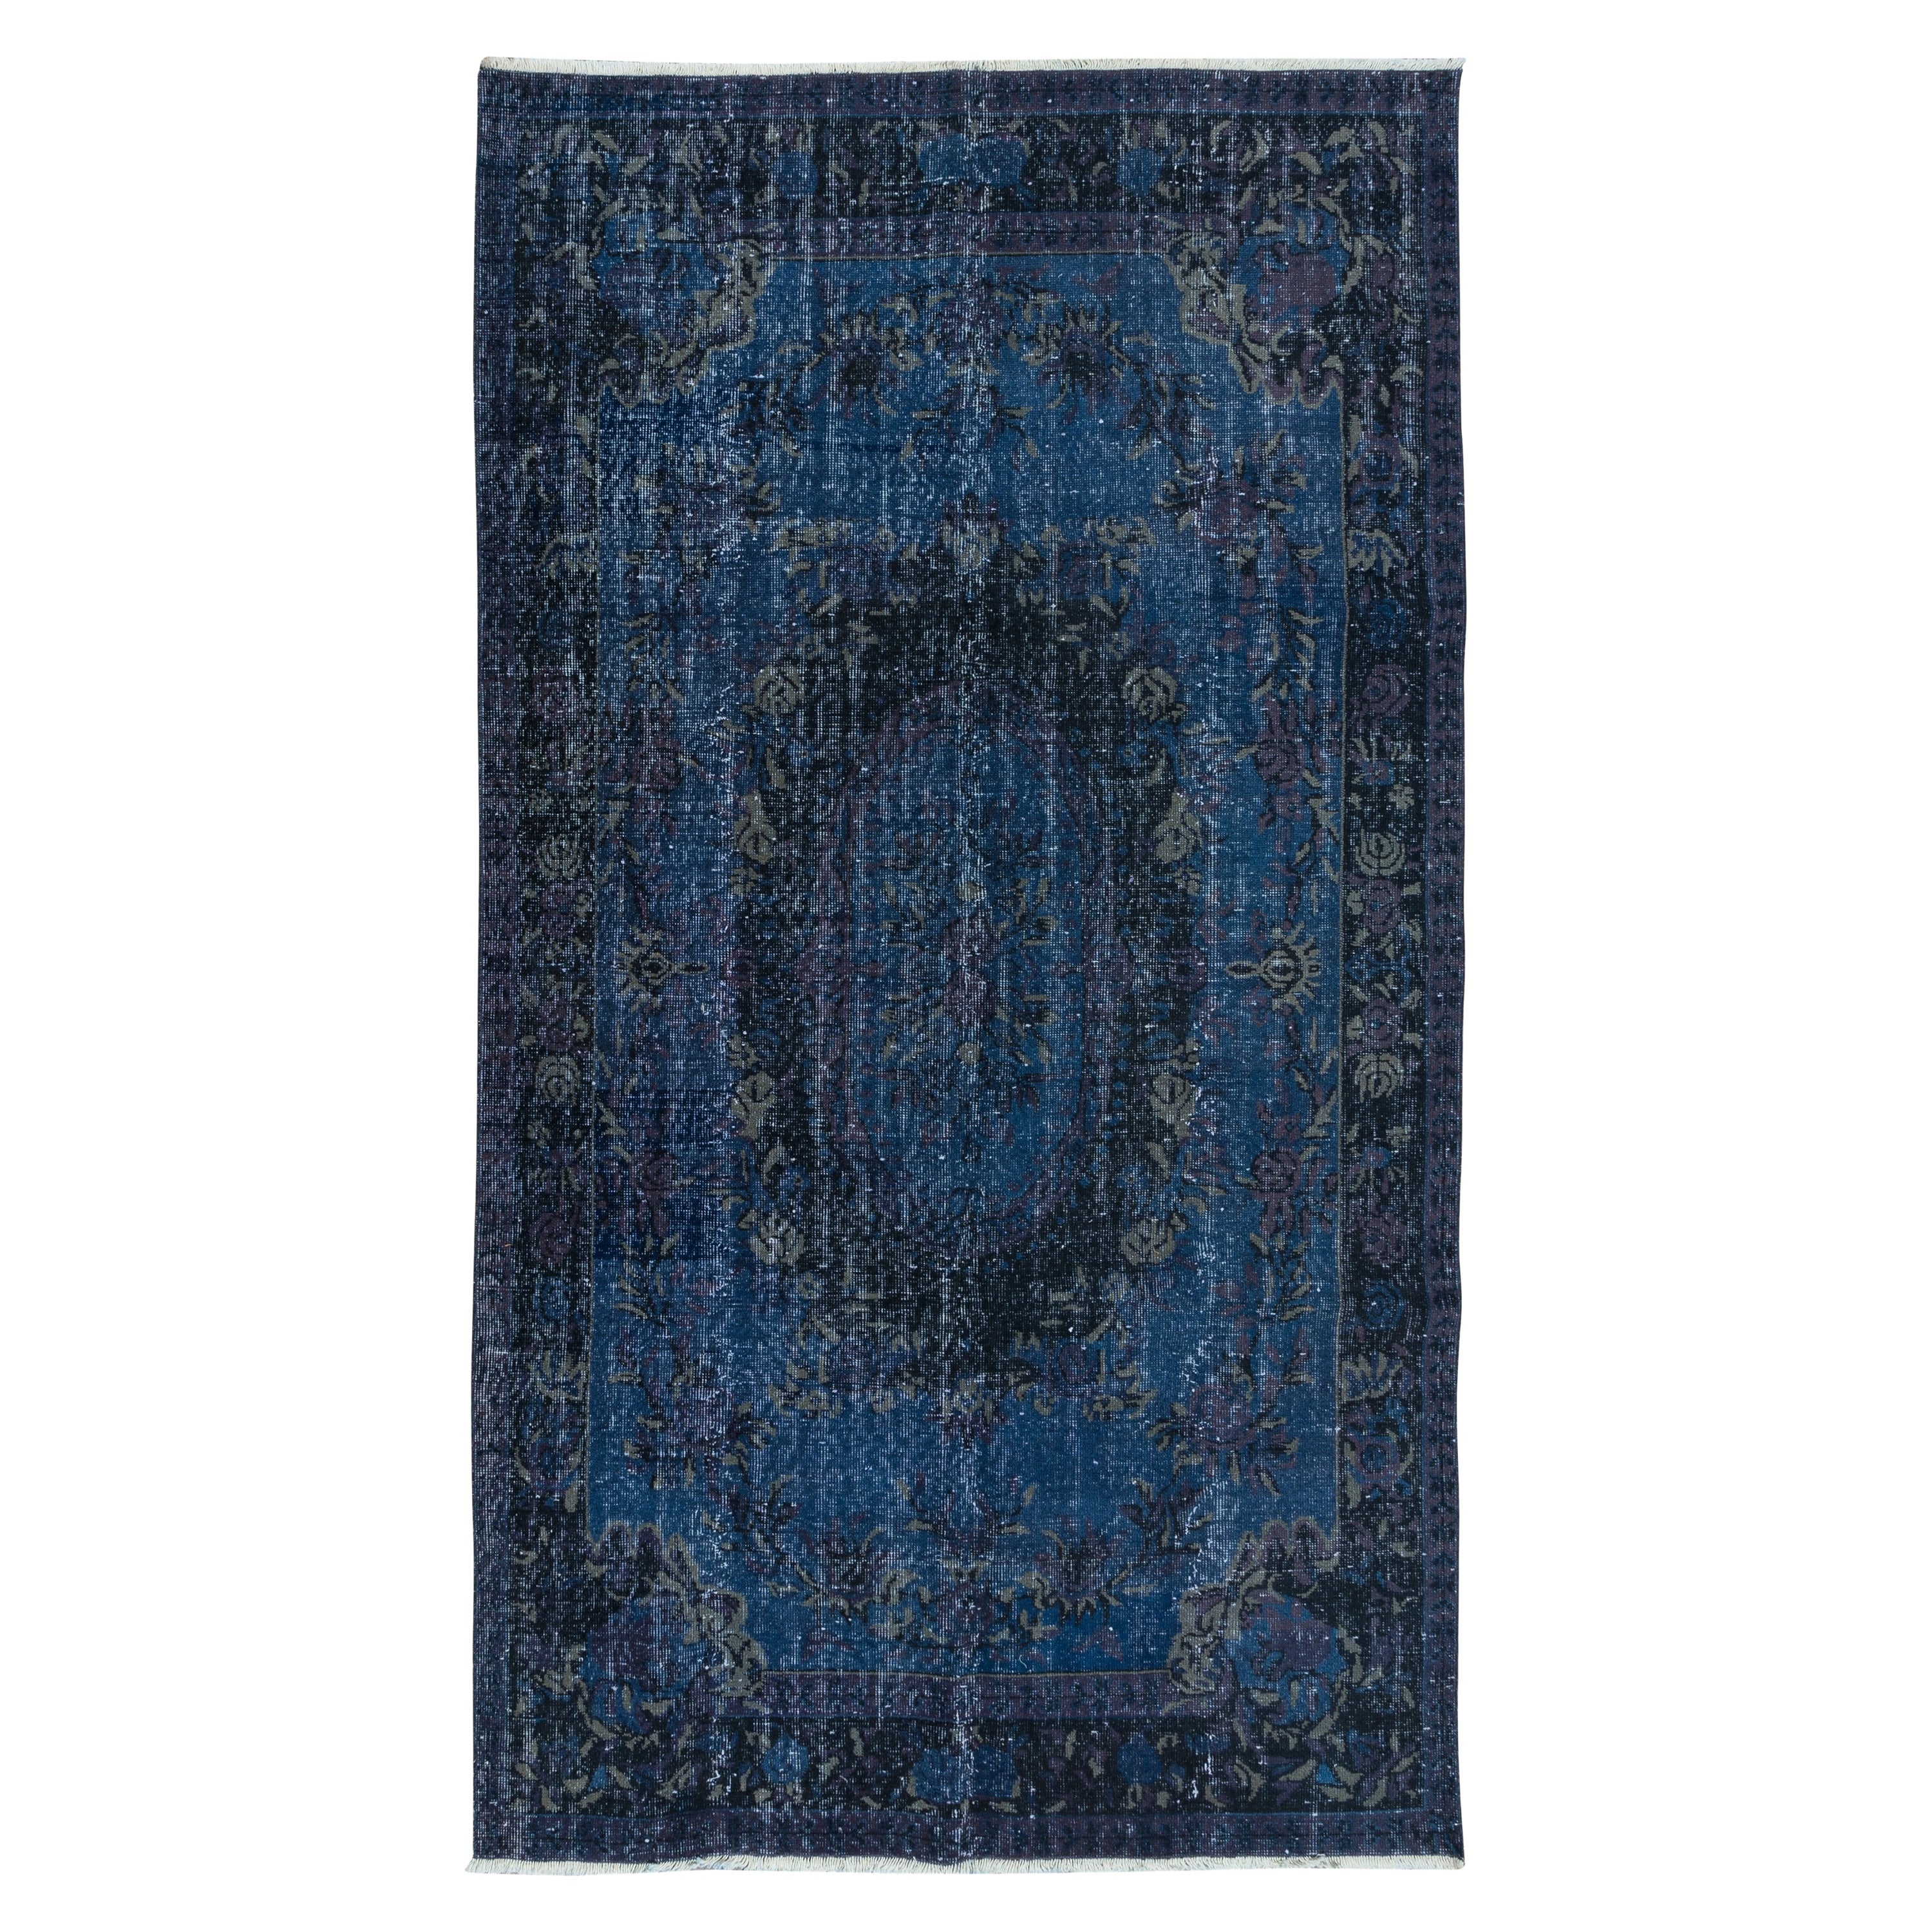 5.7x10.2 Ft French Aubusson Area Rug in Dark Blue, Handmade Turkish Carpet